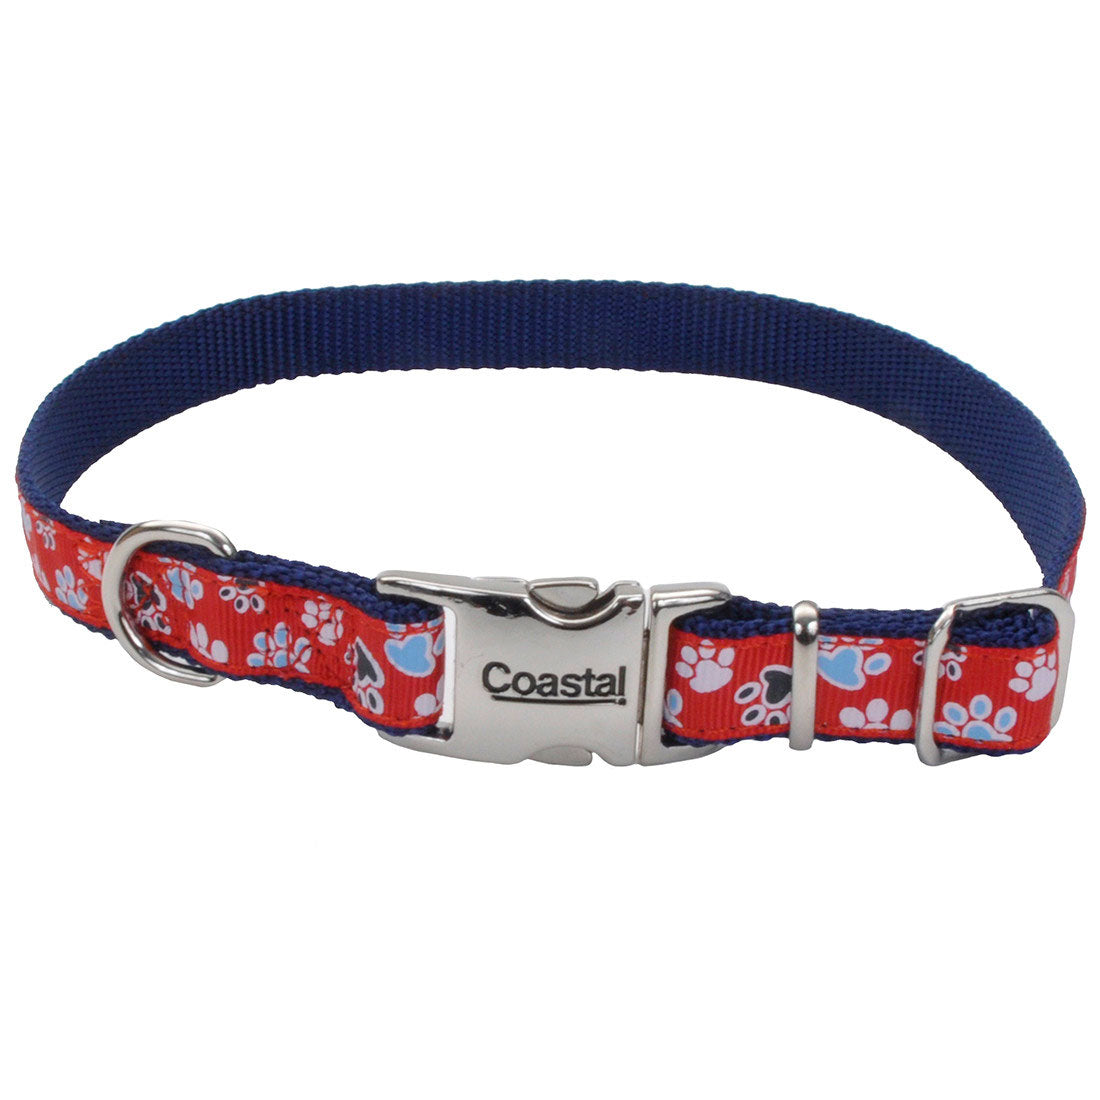 Coastal Ribbon Adjustable Dog Collar with Metal Clip Green Paw & Bone Large